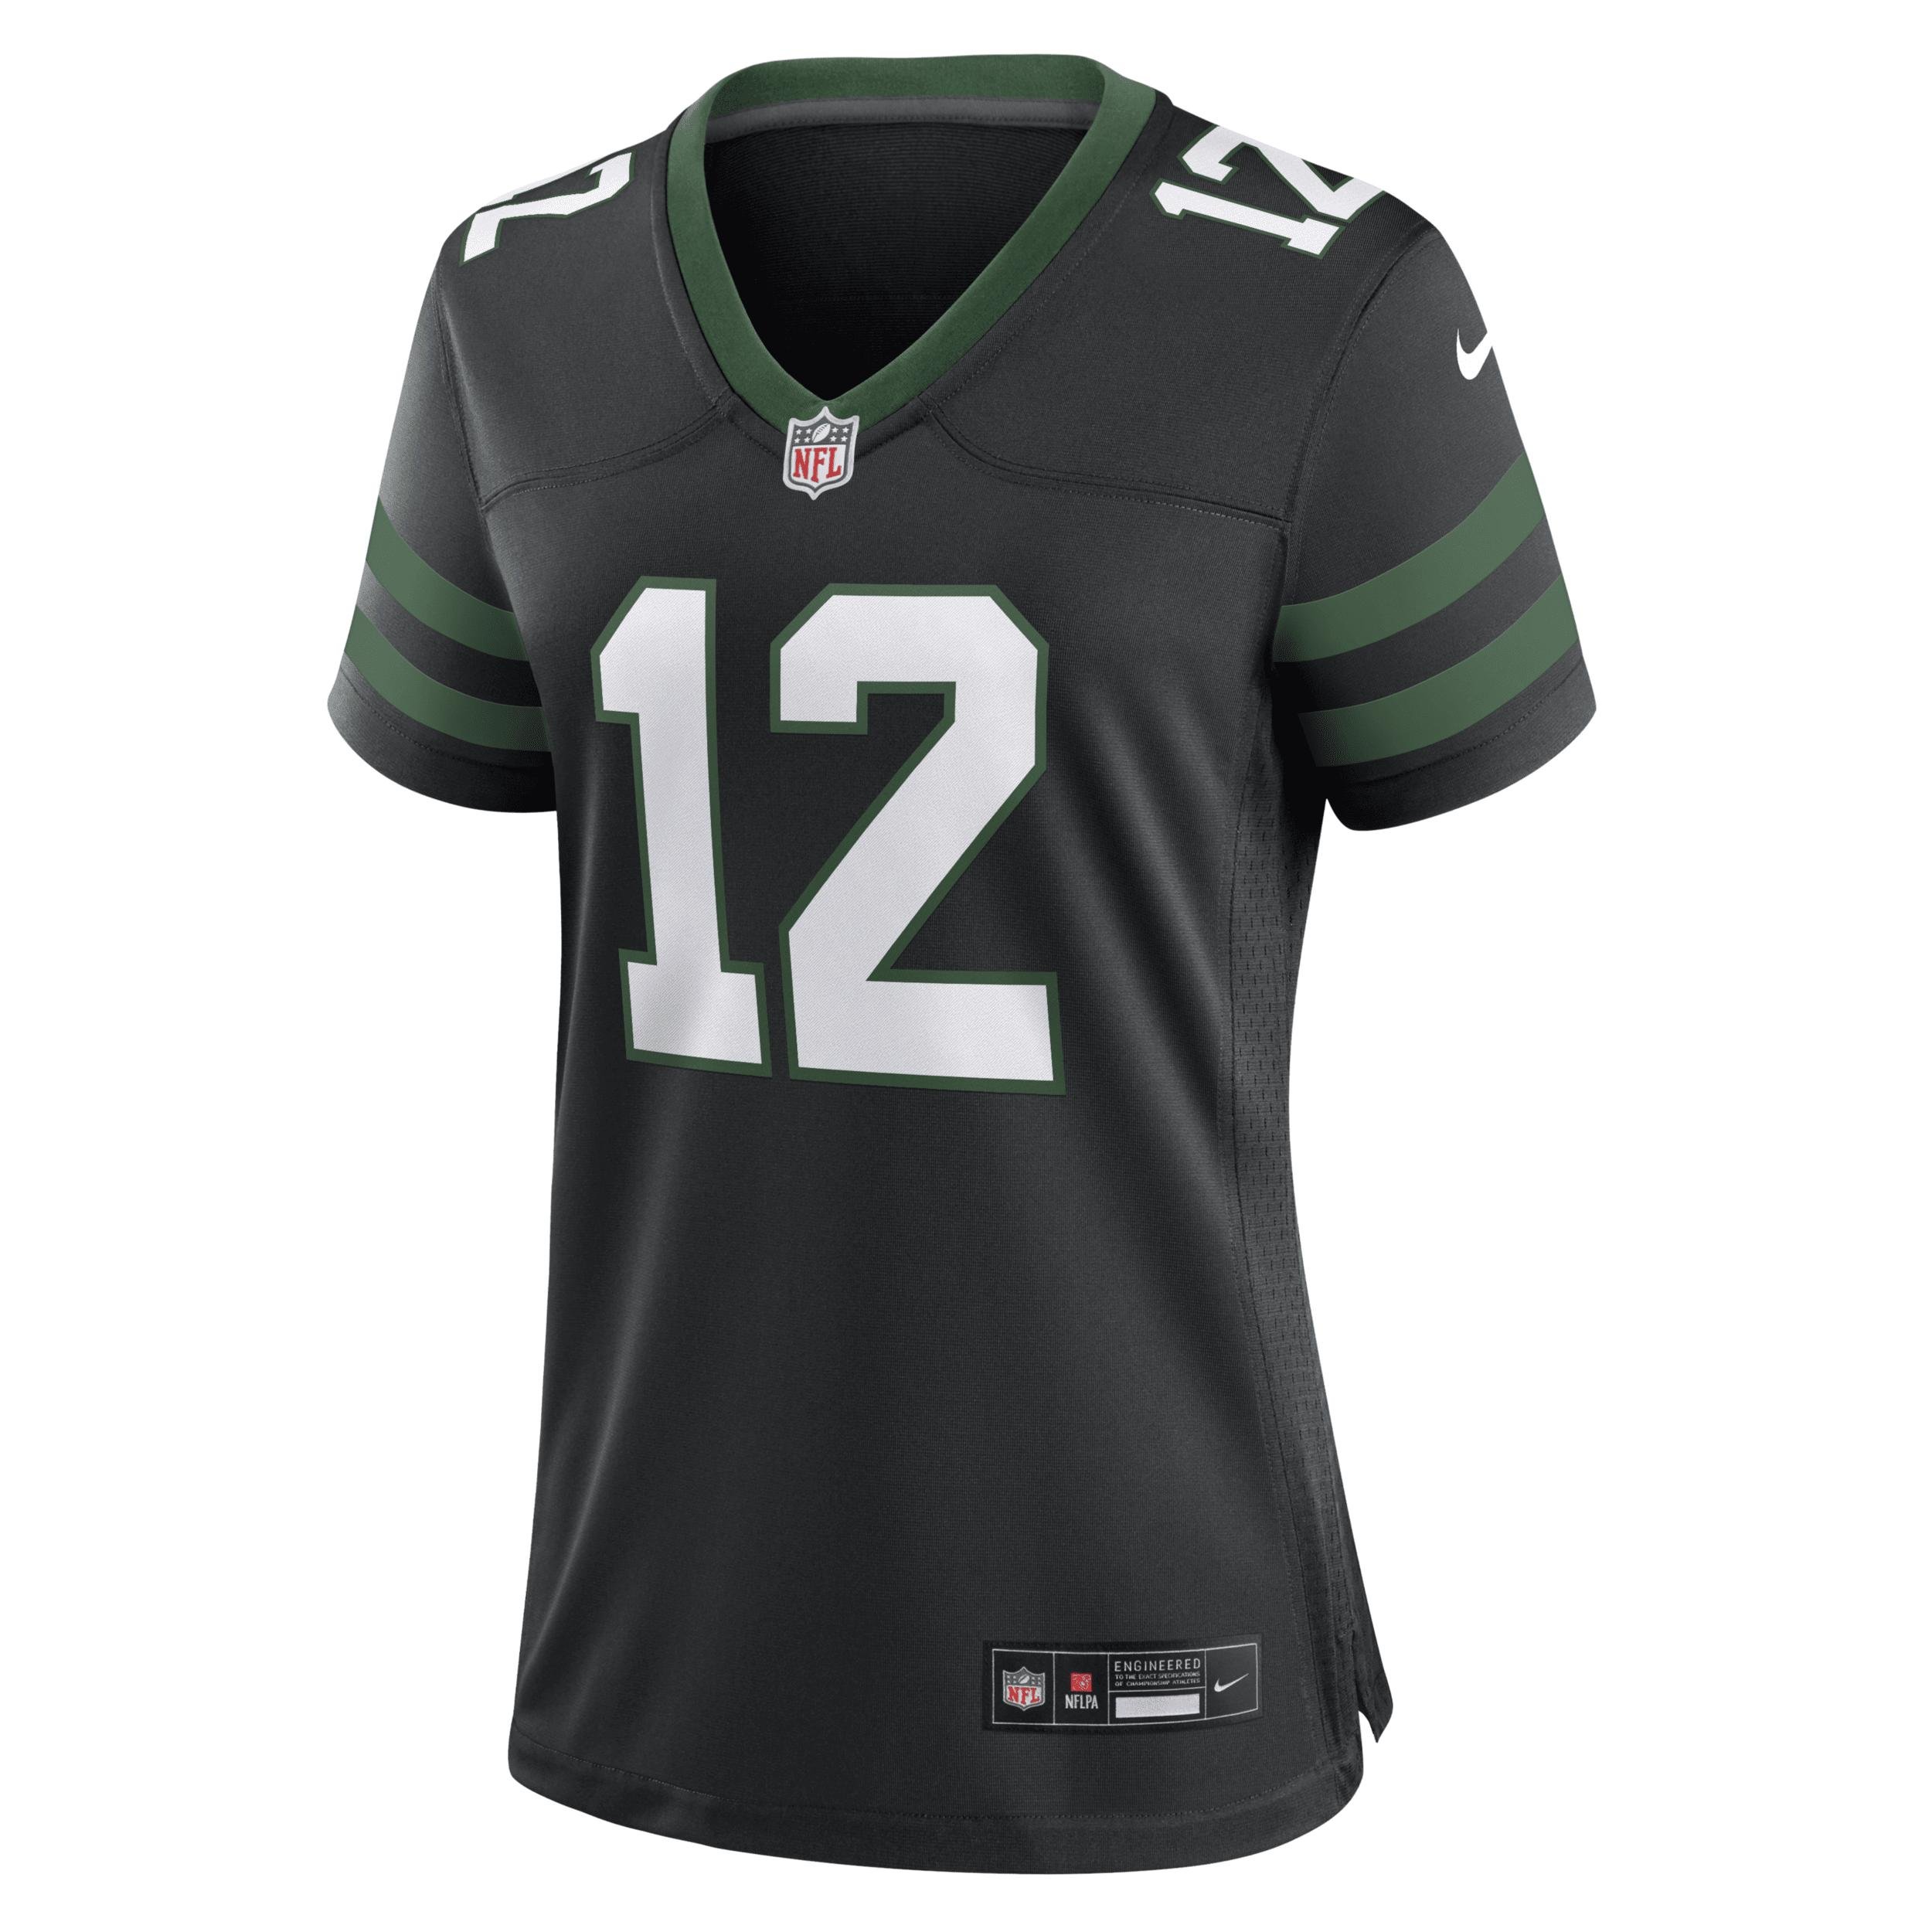 Joe Namath New York Jets Nike Women's NFL Game Football Jersey by NIKE